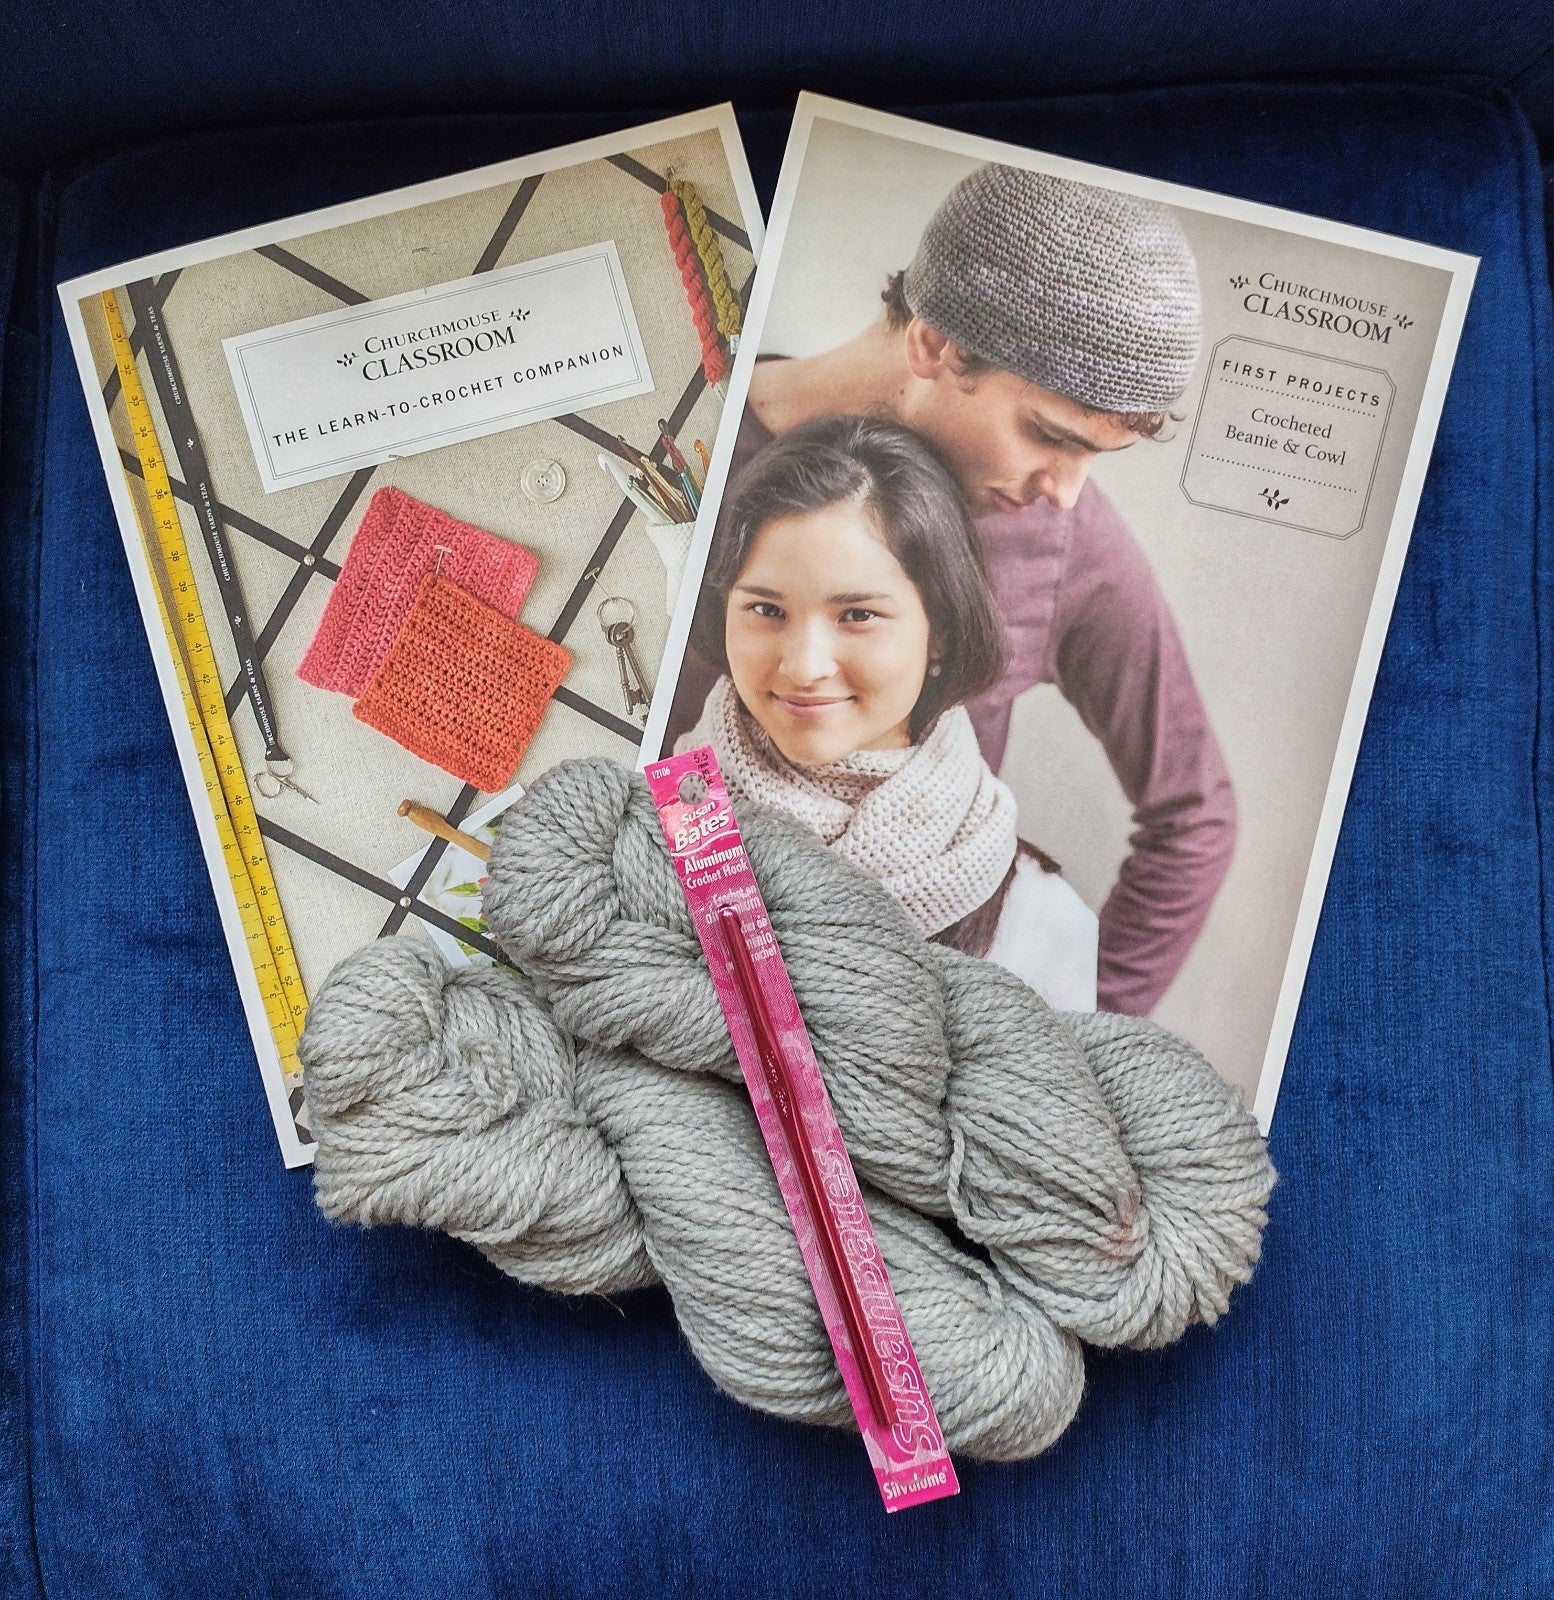 Learn Knitting Kit - Susan Bates - Beginner Knitting Kits at